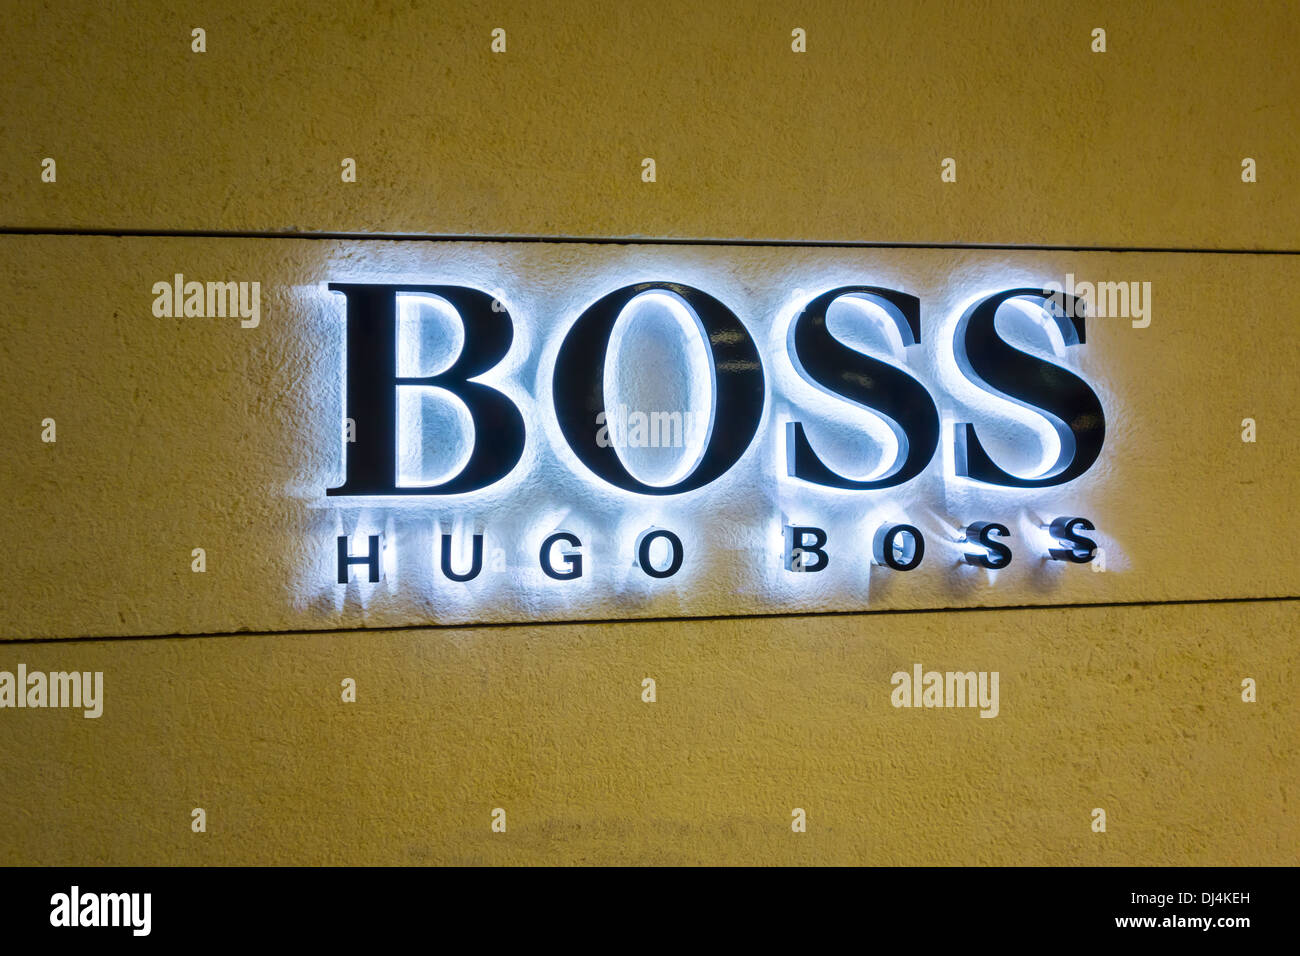 Boss Hugo Boss sign logo light lights lit up Stock Photo - Alamy